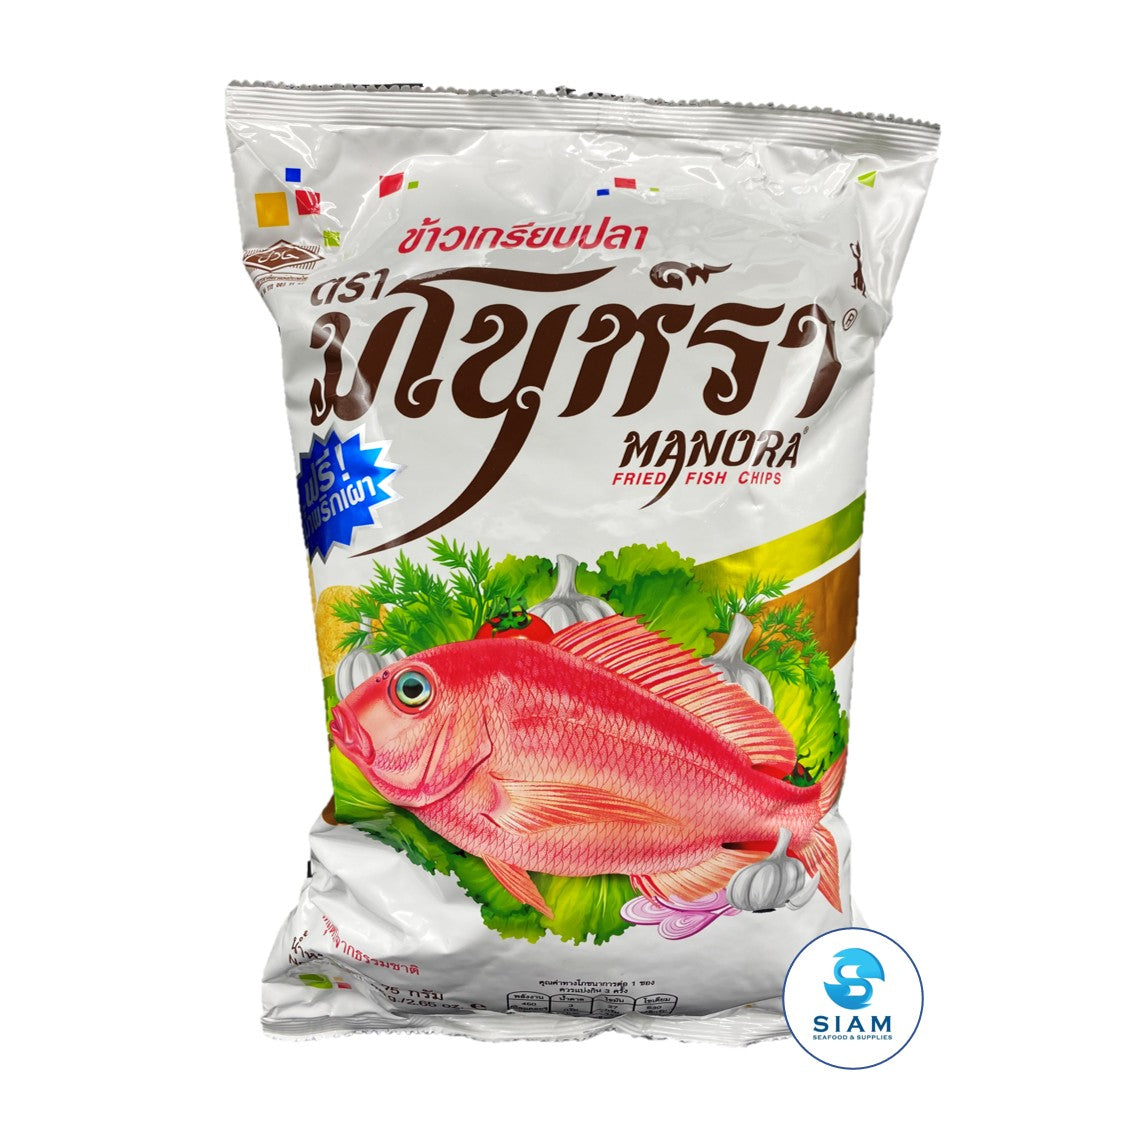 Fried Fish Chips - Manora (3.6 oz-vol wt 8 oz) ข้าวเกรียบปลา มโนห์รา shippable Manora